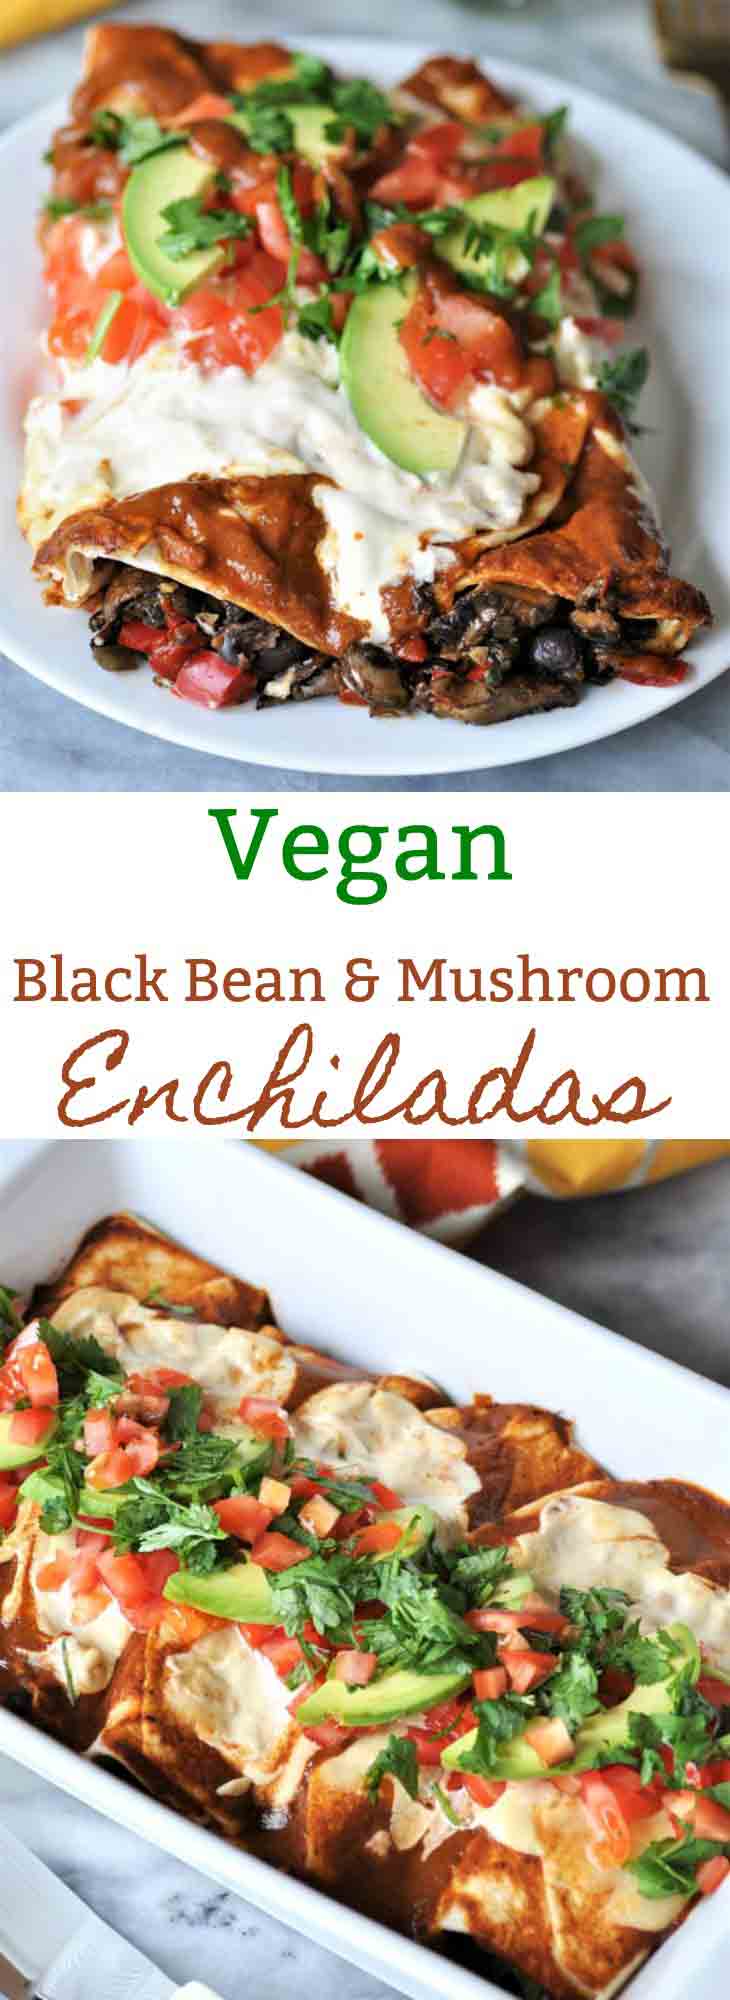 Vegan black bean & mushroom enchiladas with homemade enchilada sauce and cashew cream. The perfect Mexican dinner.